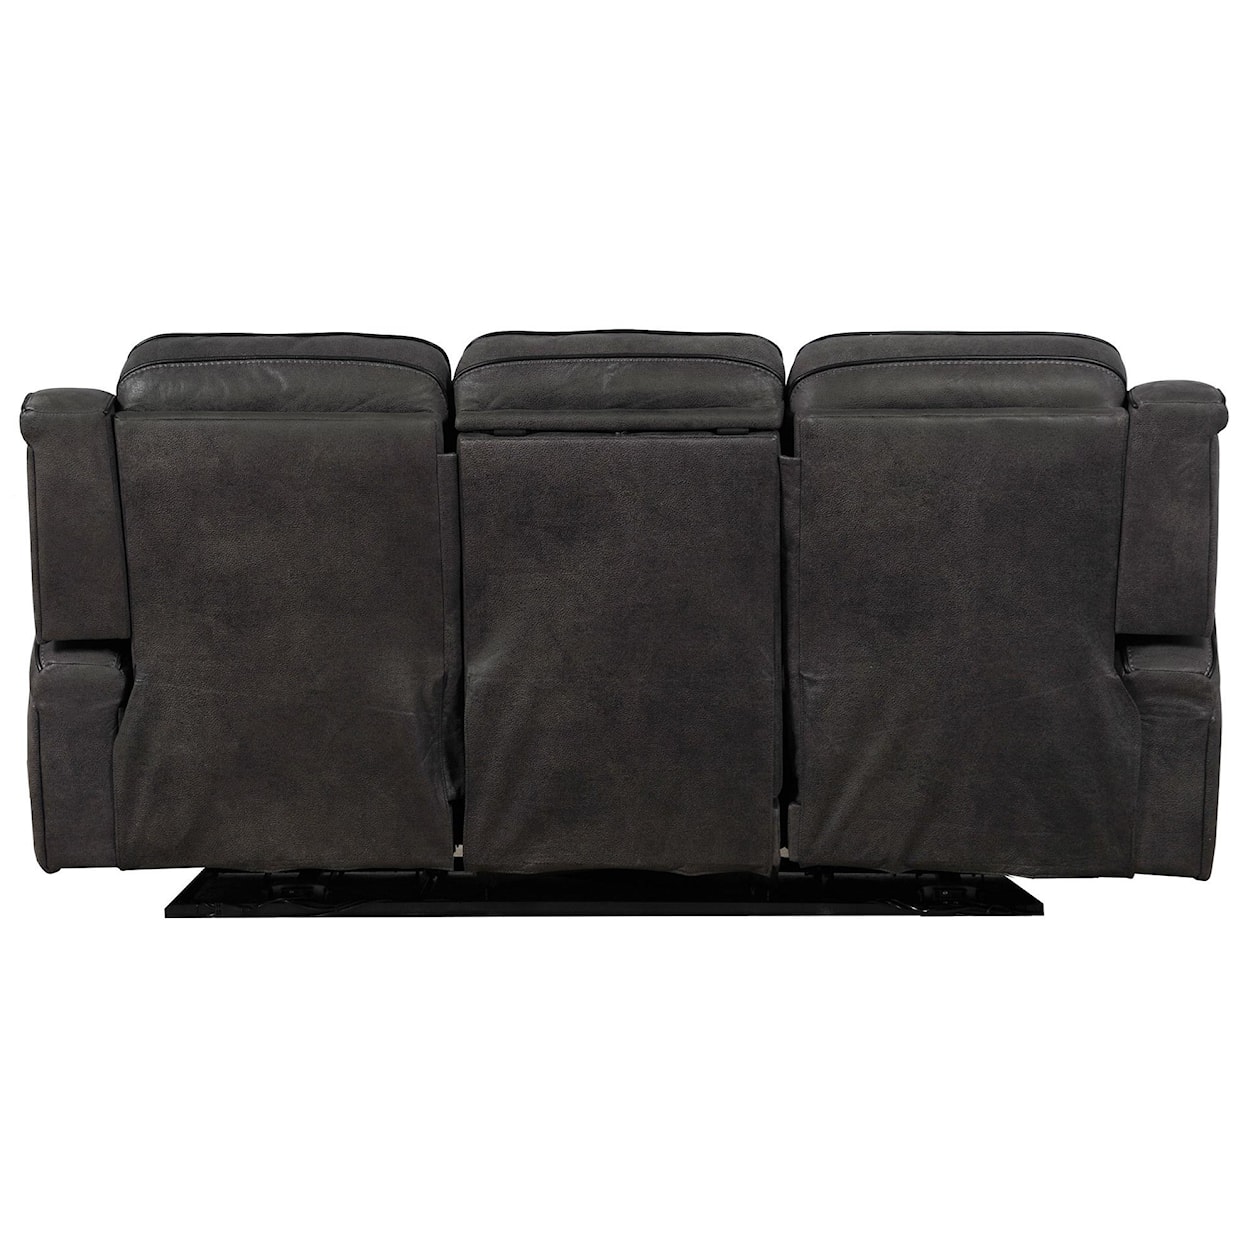 Builtwell 28659 App-Controlled Reclining Sofa